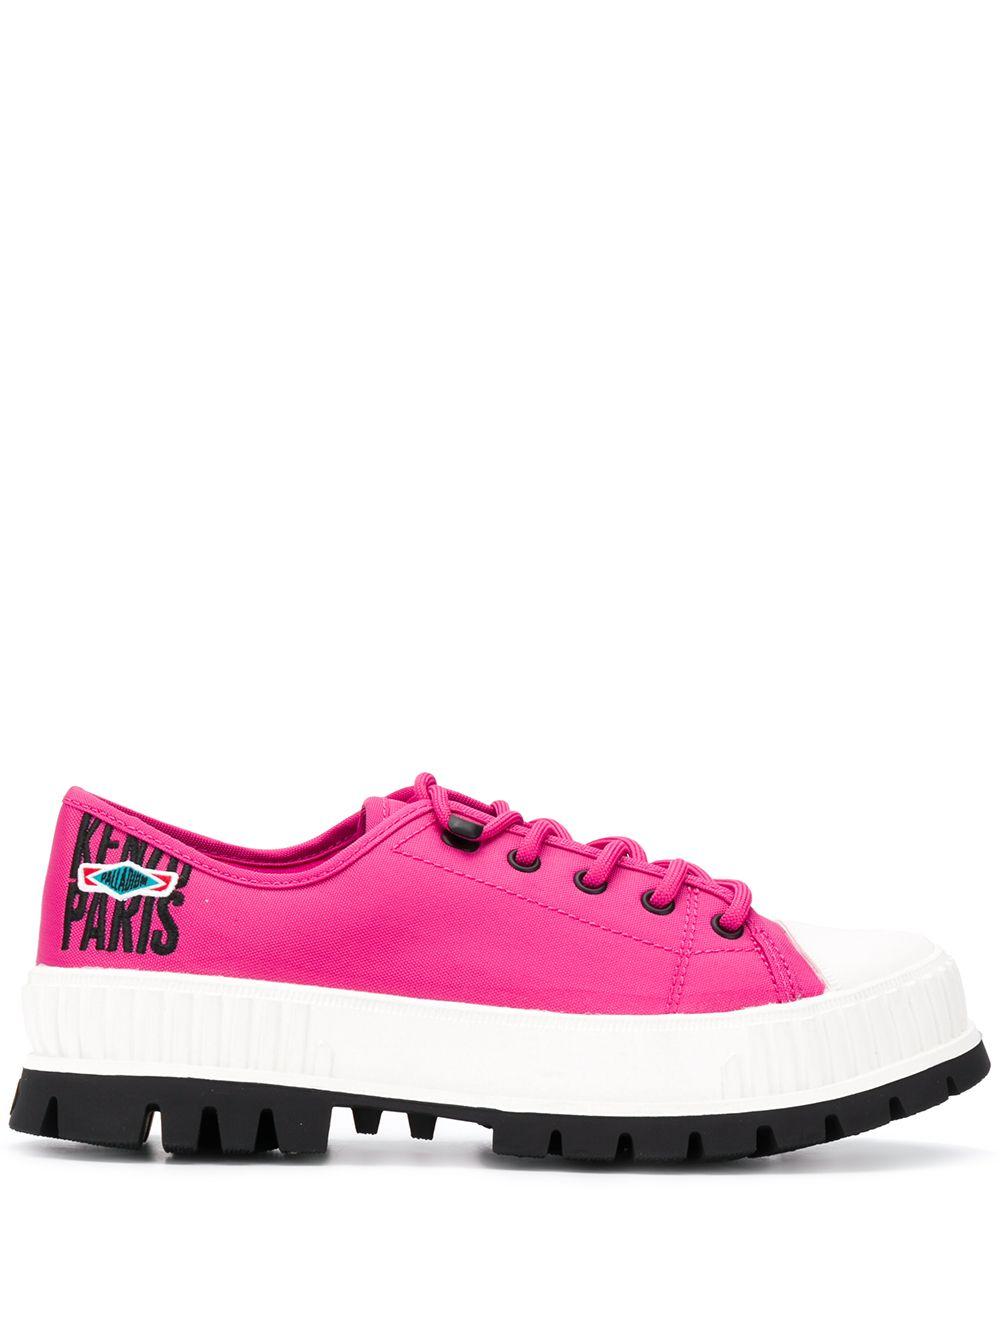 KENZO Synthetic X Palladium Pallashock Low-top Sneakers in Fuchsia (Pink) |  Lyst